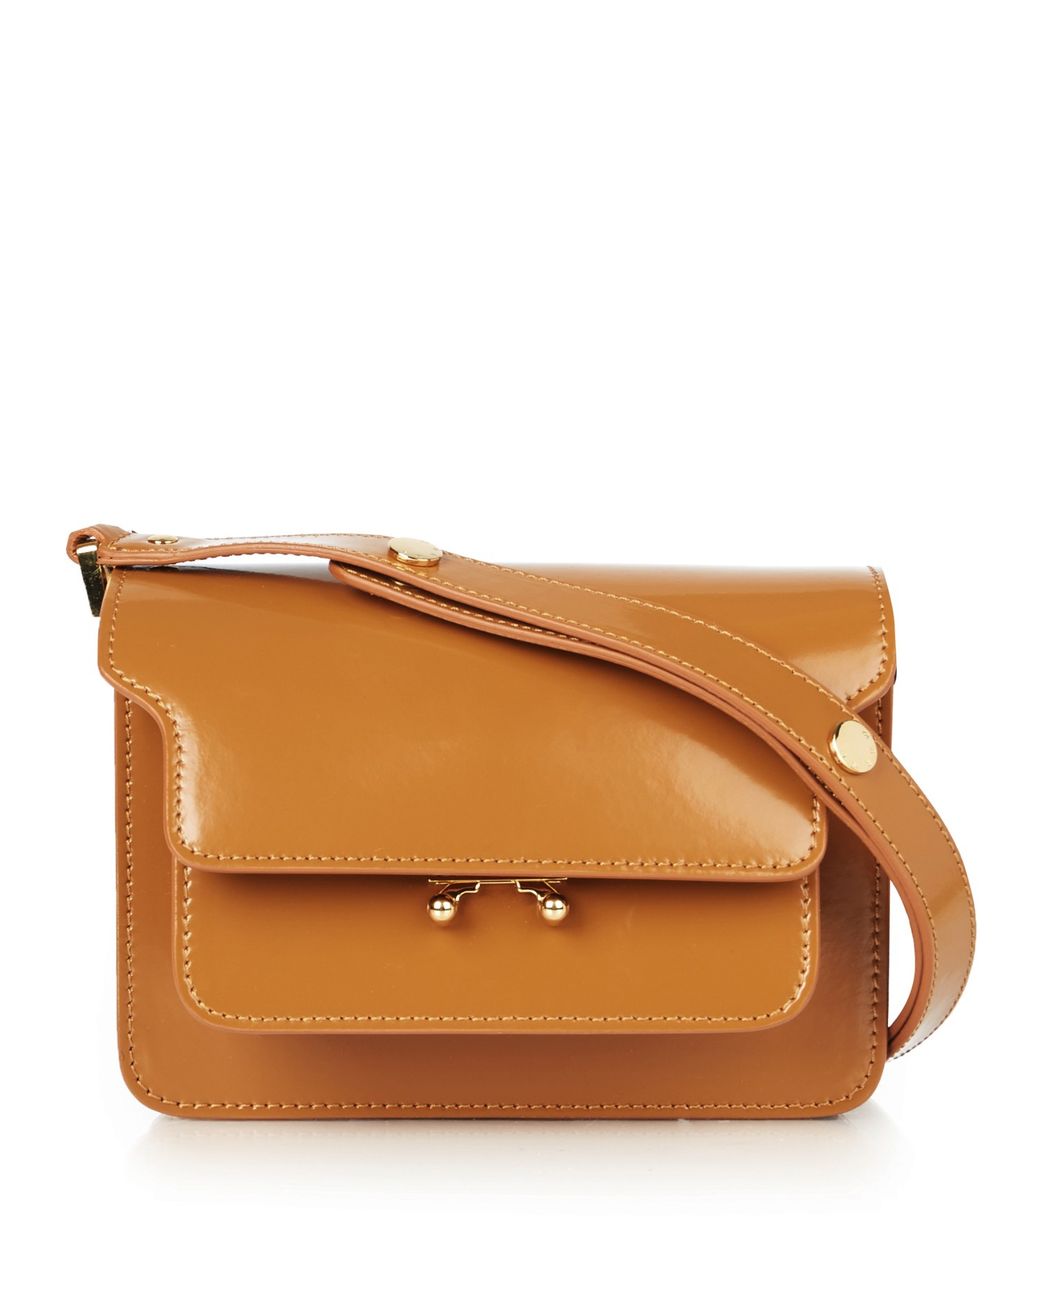 Marni Trunk Mini Leather Shoulder Bag in Tan (Brown) | Lyst